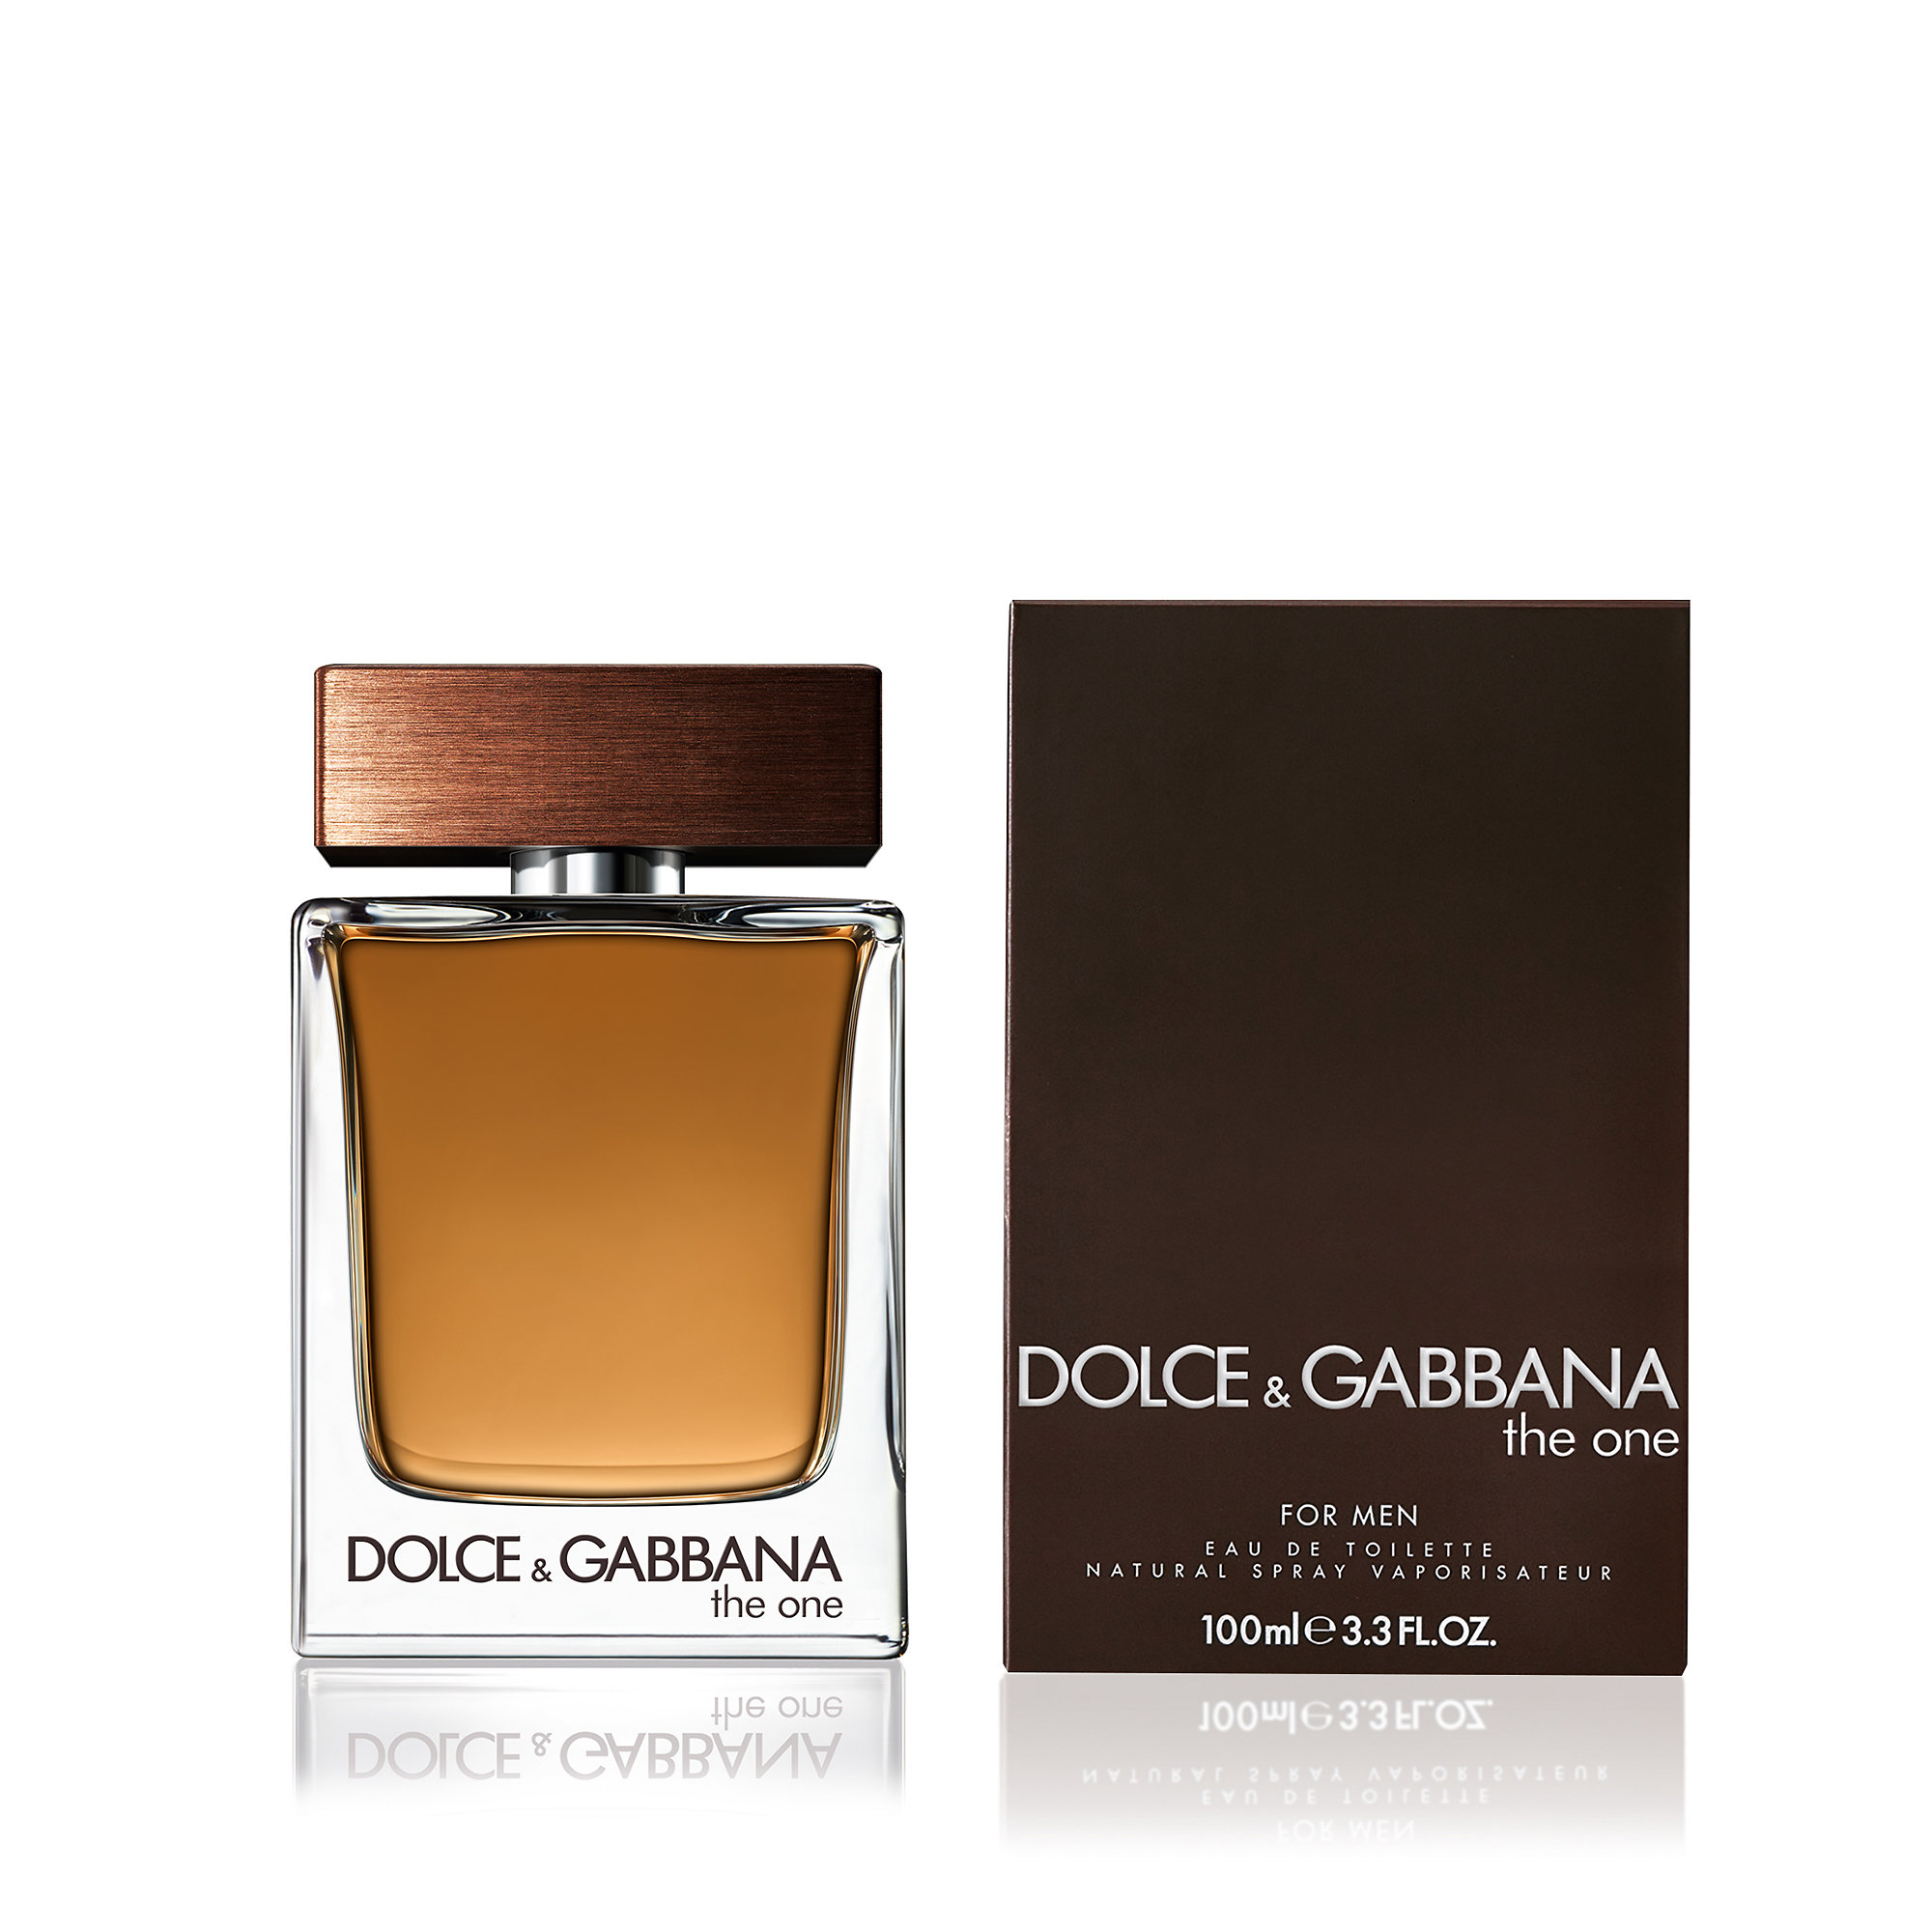 Купить Туалетная вода Dolce & Gabbana, Dolce & Gabbana The One For Men Eau De Toilette 50ml, Италия